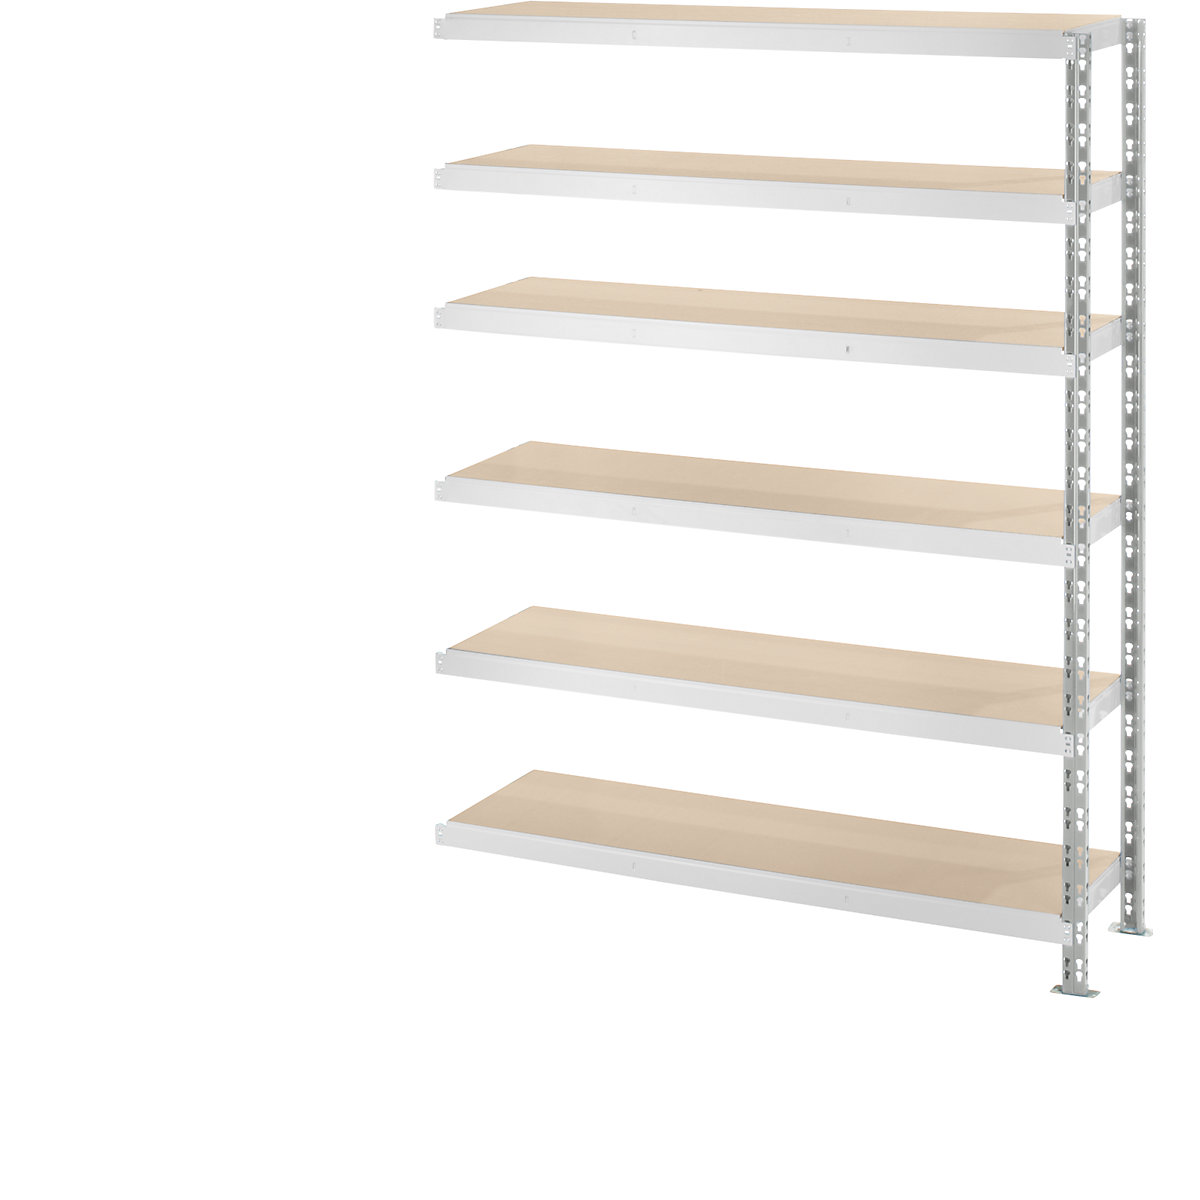 Wide span boltless shelf unit with moulded chipboard shelves, depth 400 mm, extension shelf unit, HxW 1976 x 1525 mm